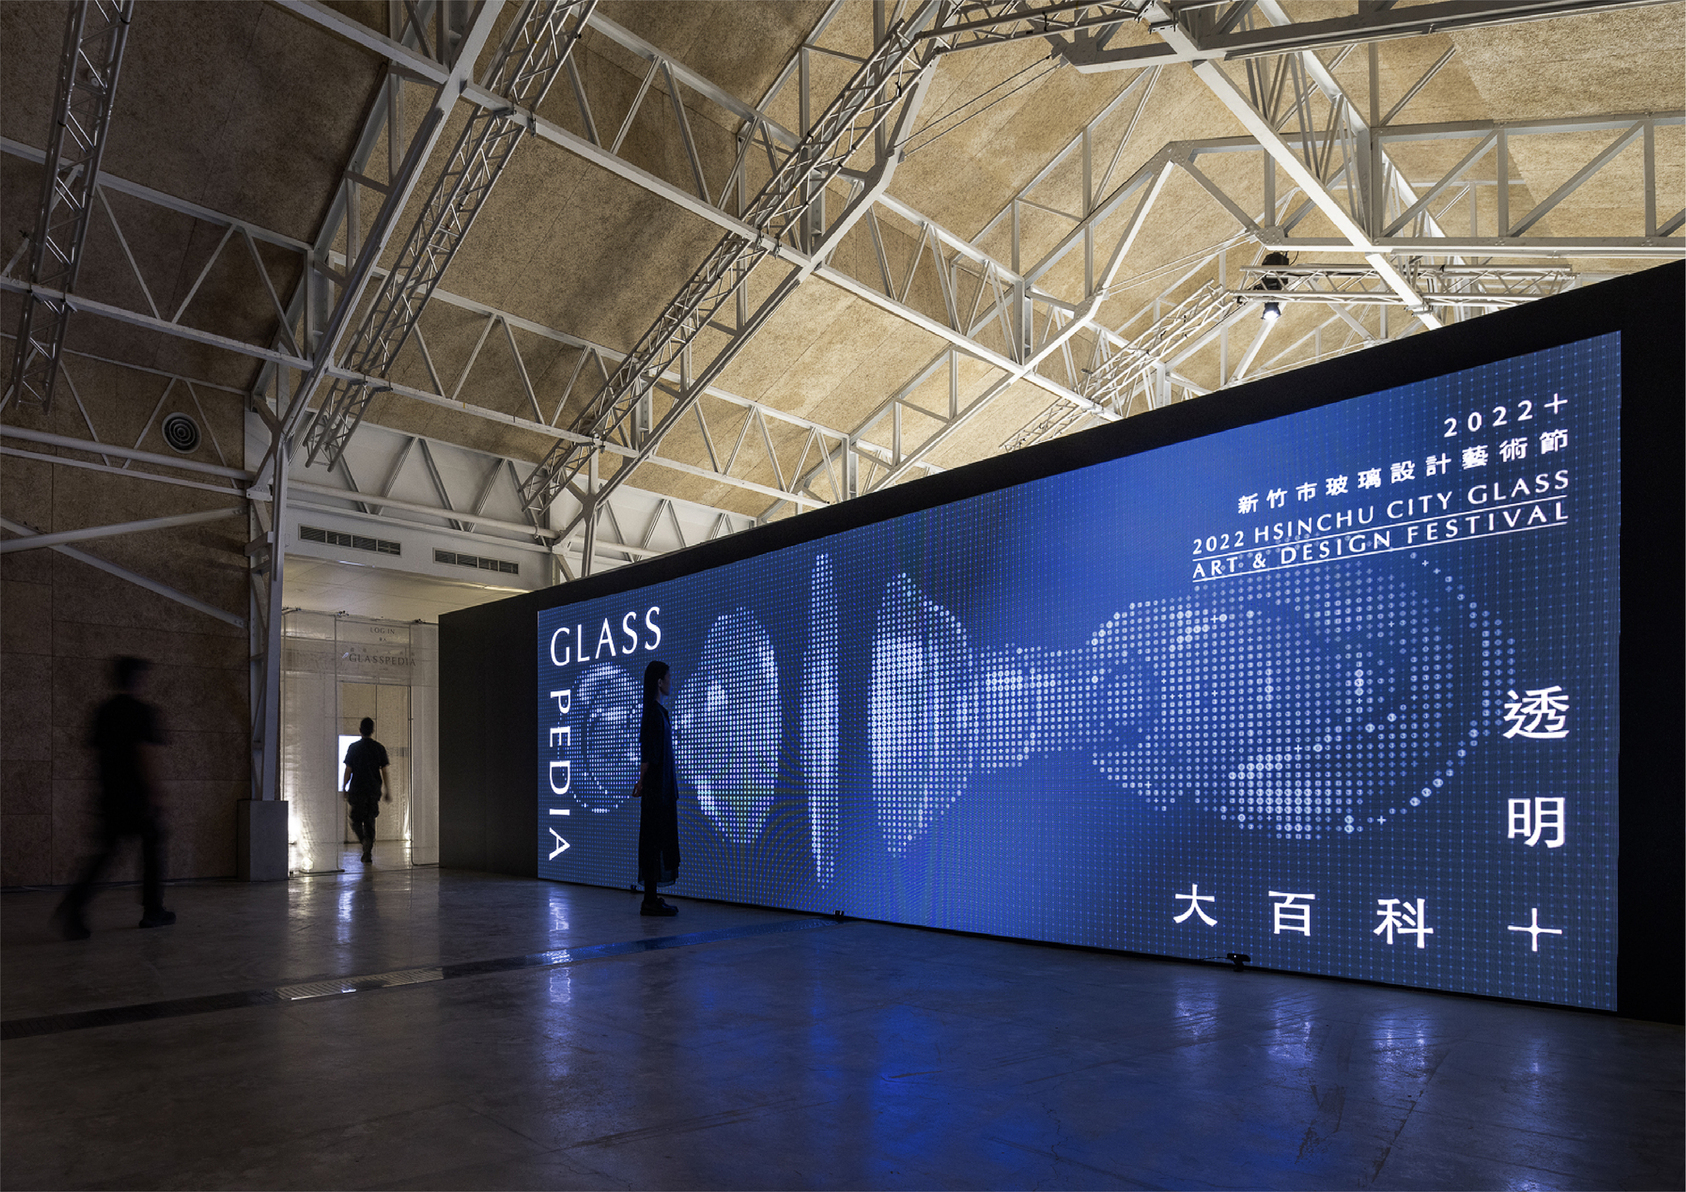 2022 Hsinchu City Glass Art & Design Festival : GLASSPEDIA	-5